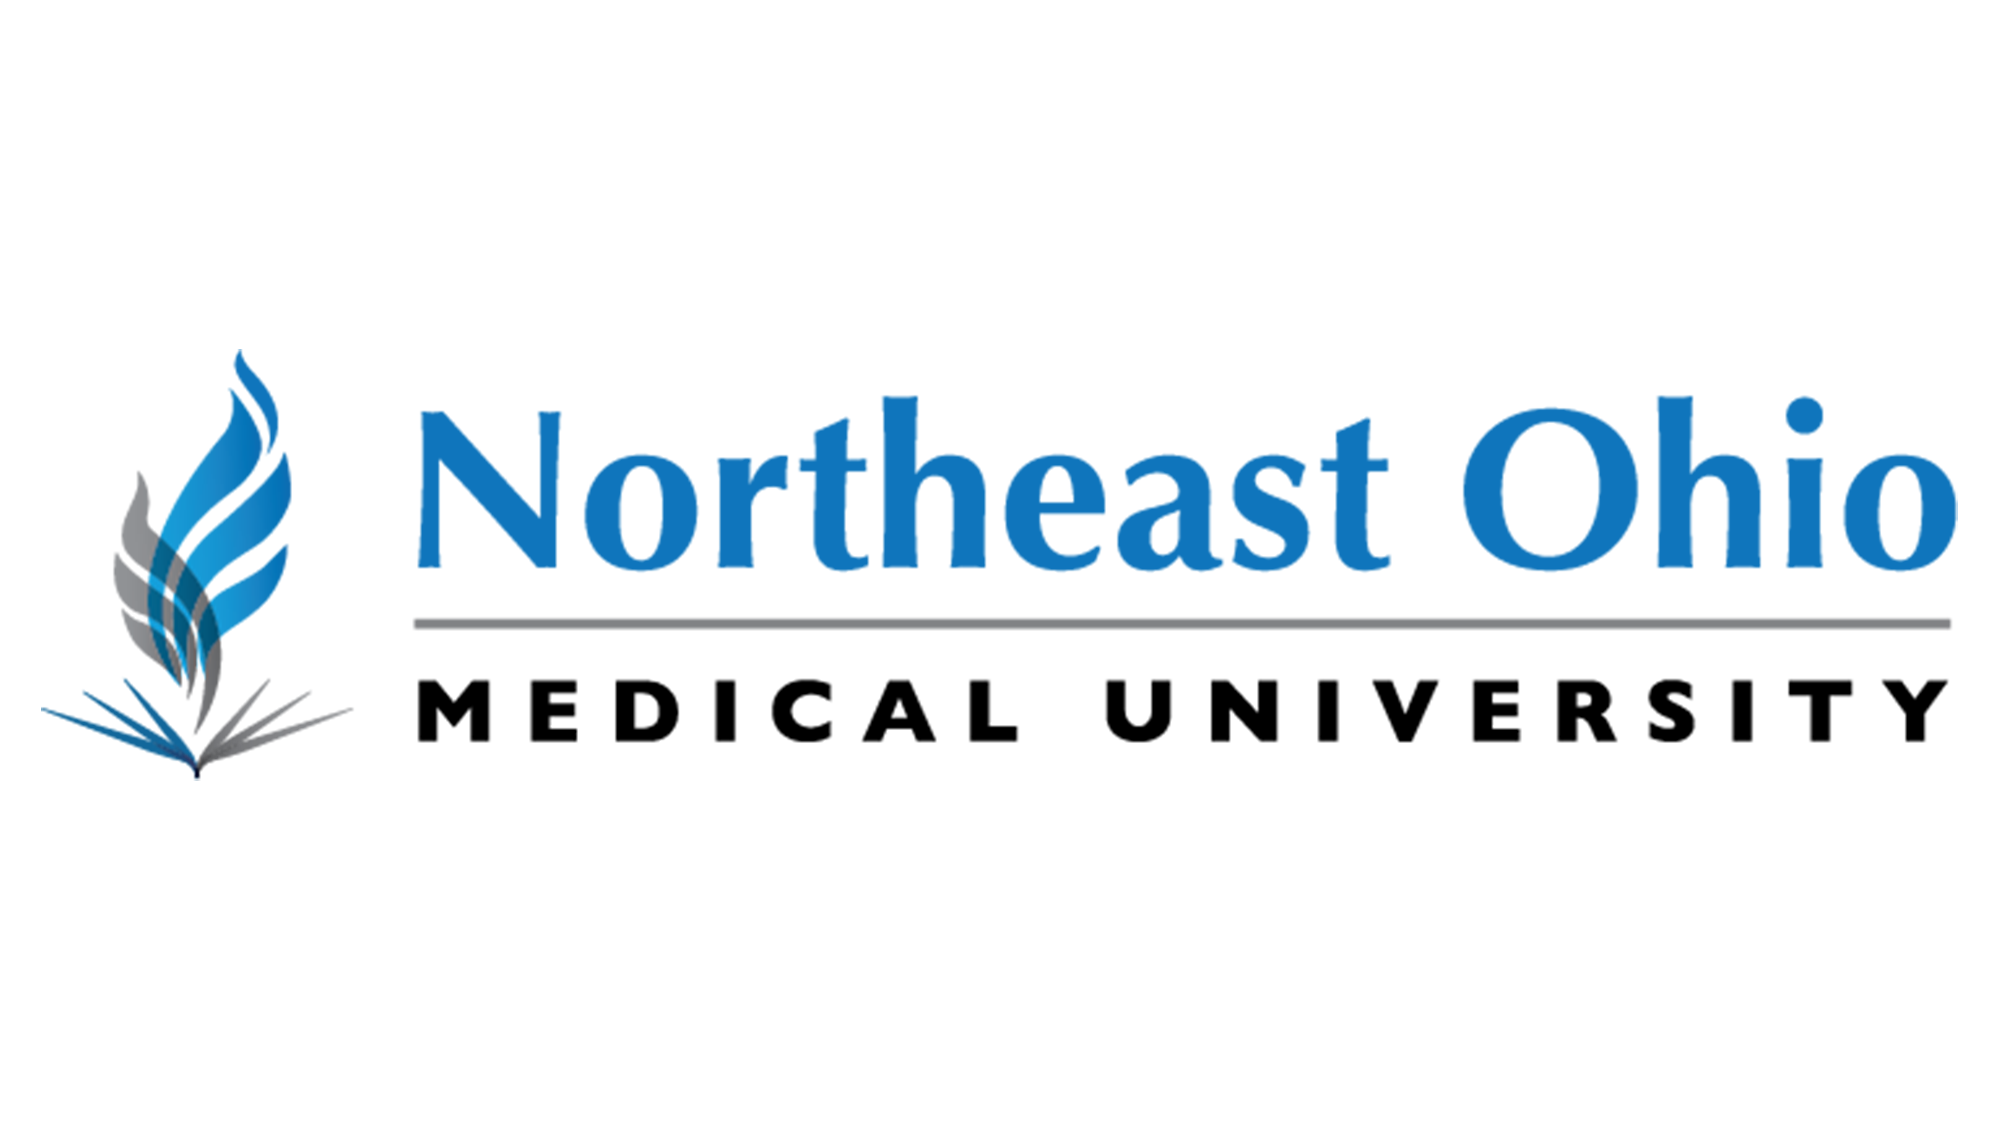 Northeastern Ohio Medical University